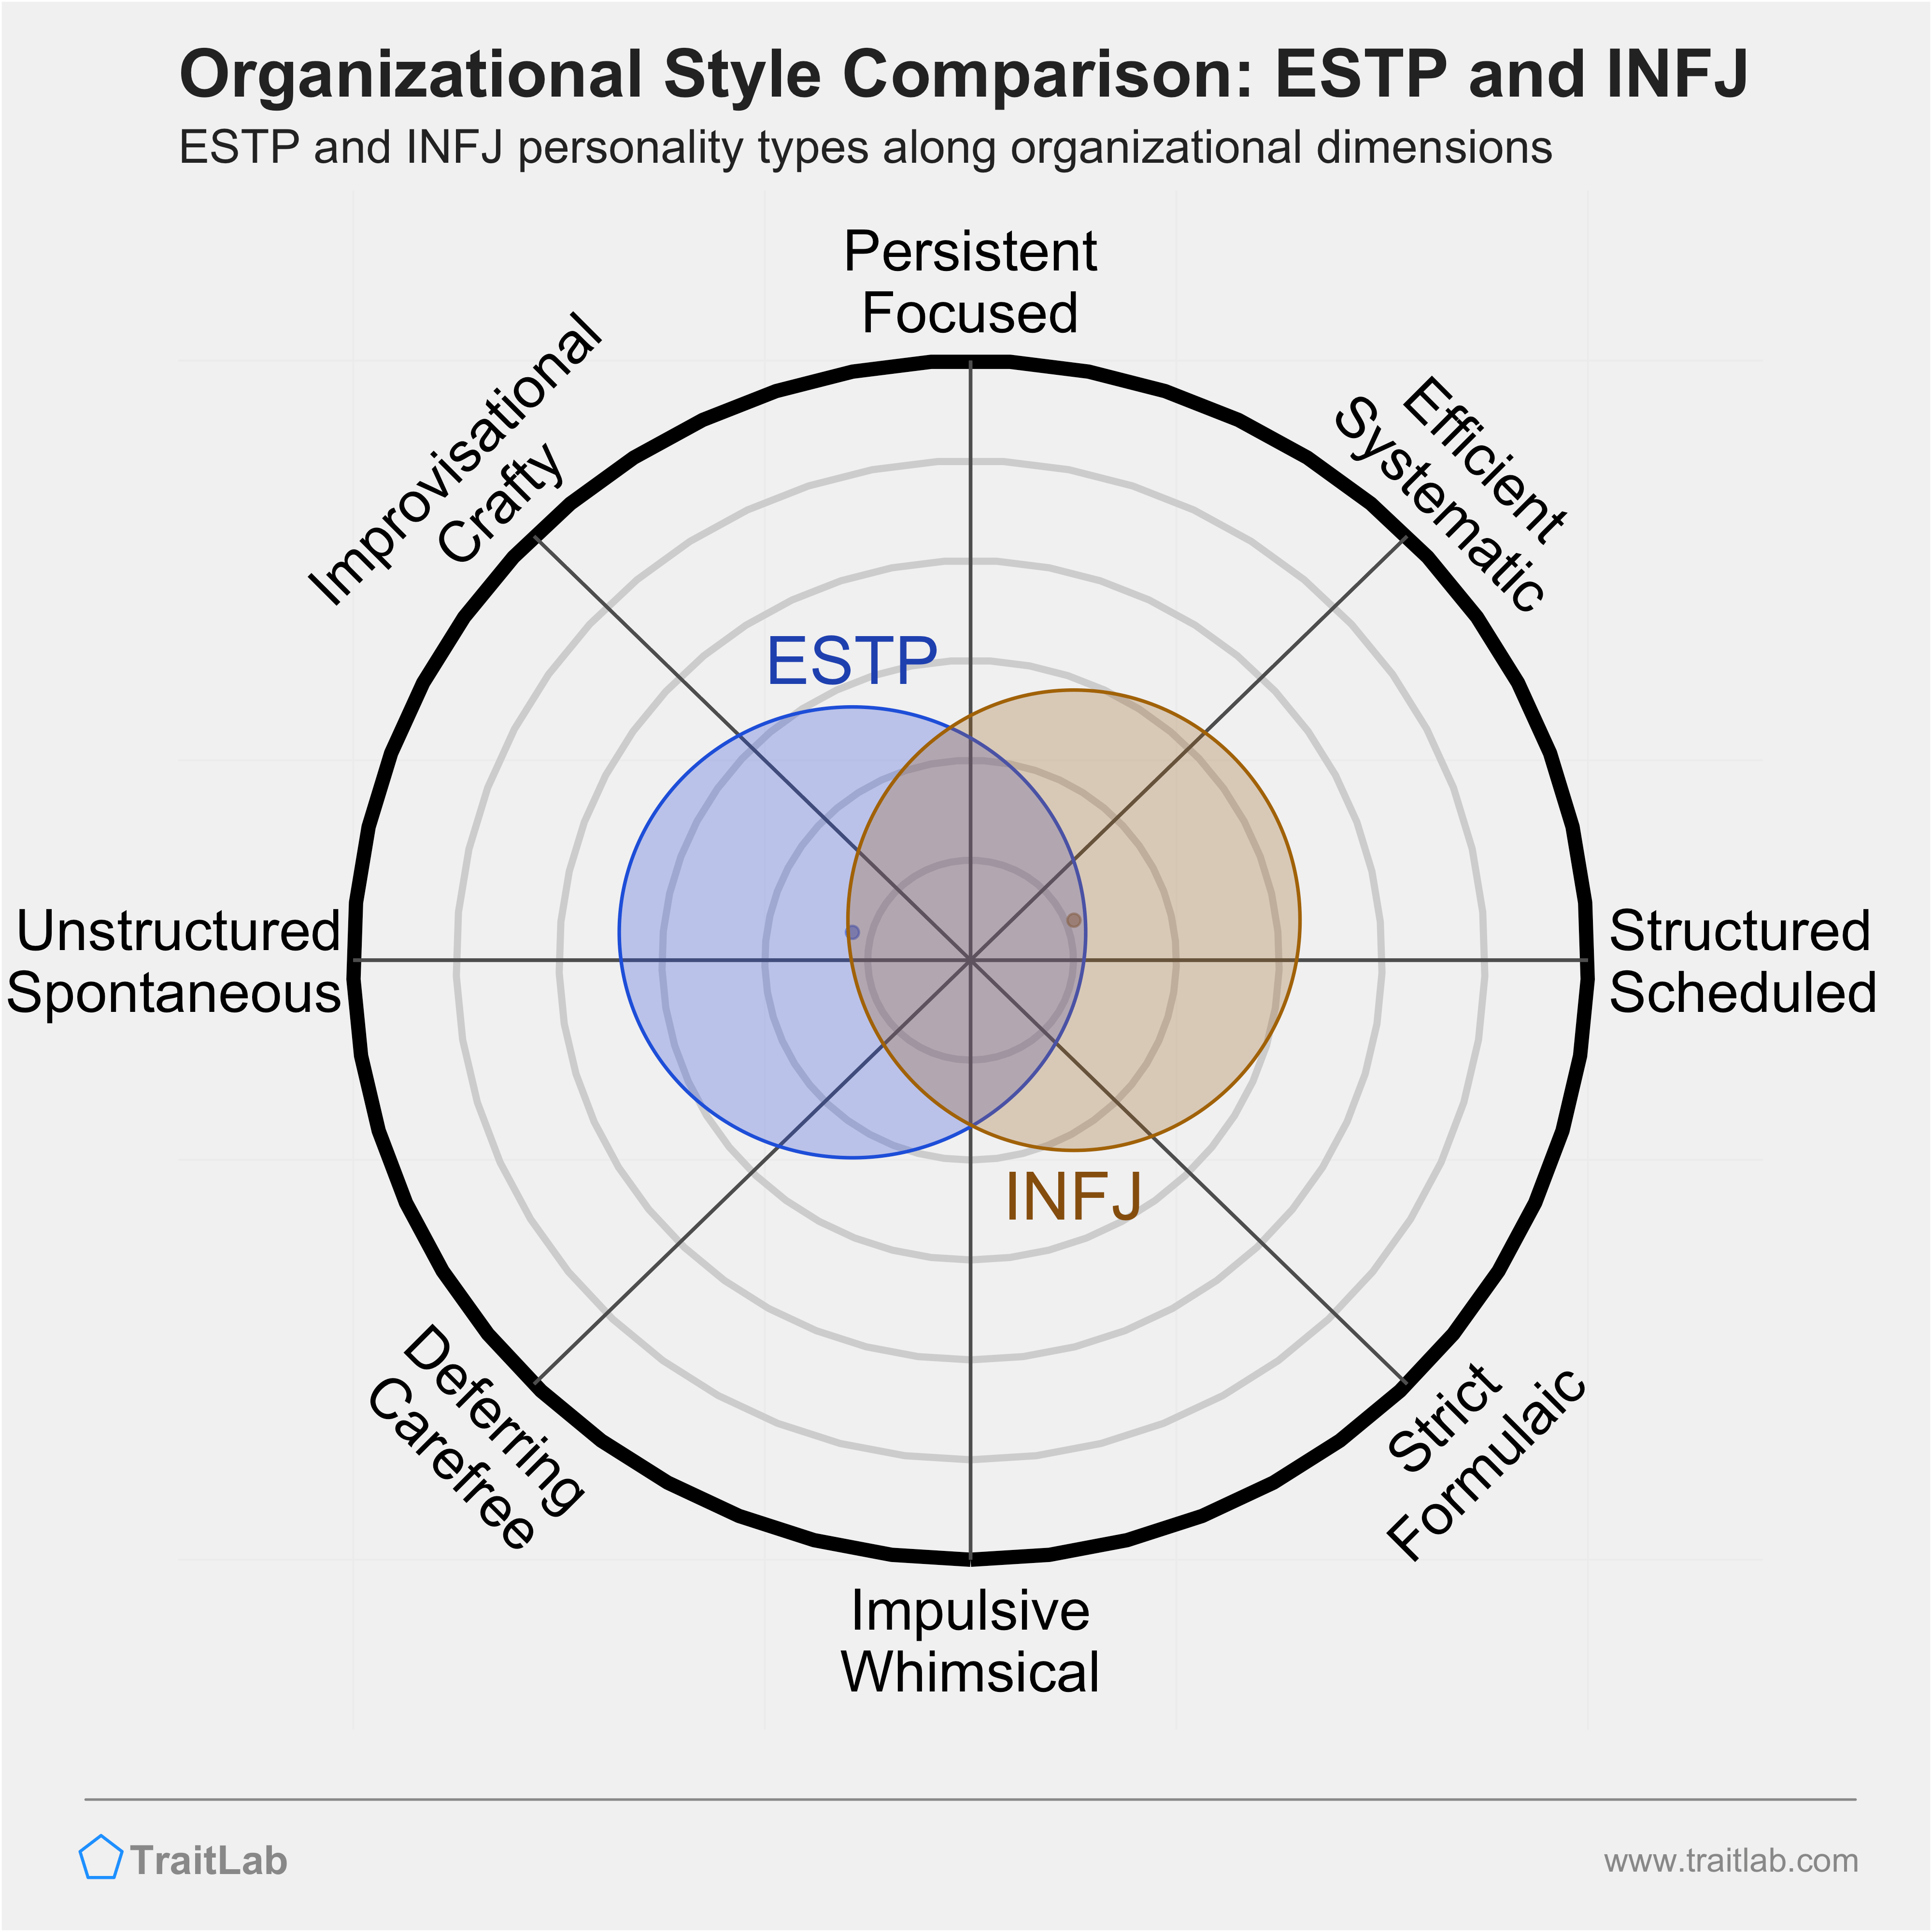 ESTP and INFJ comparison across organizational dimensions